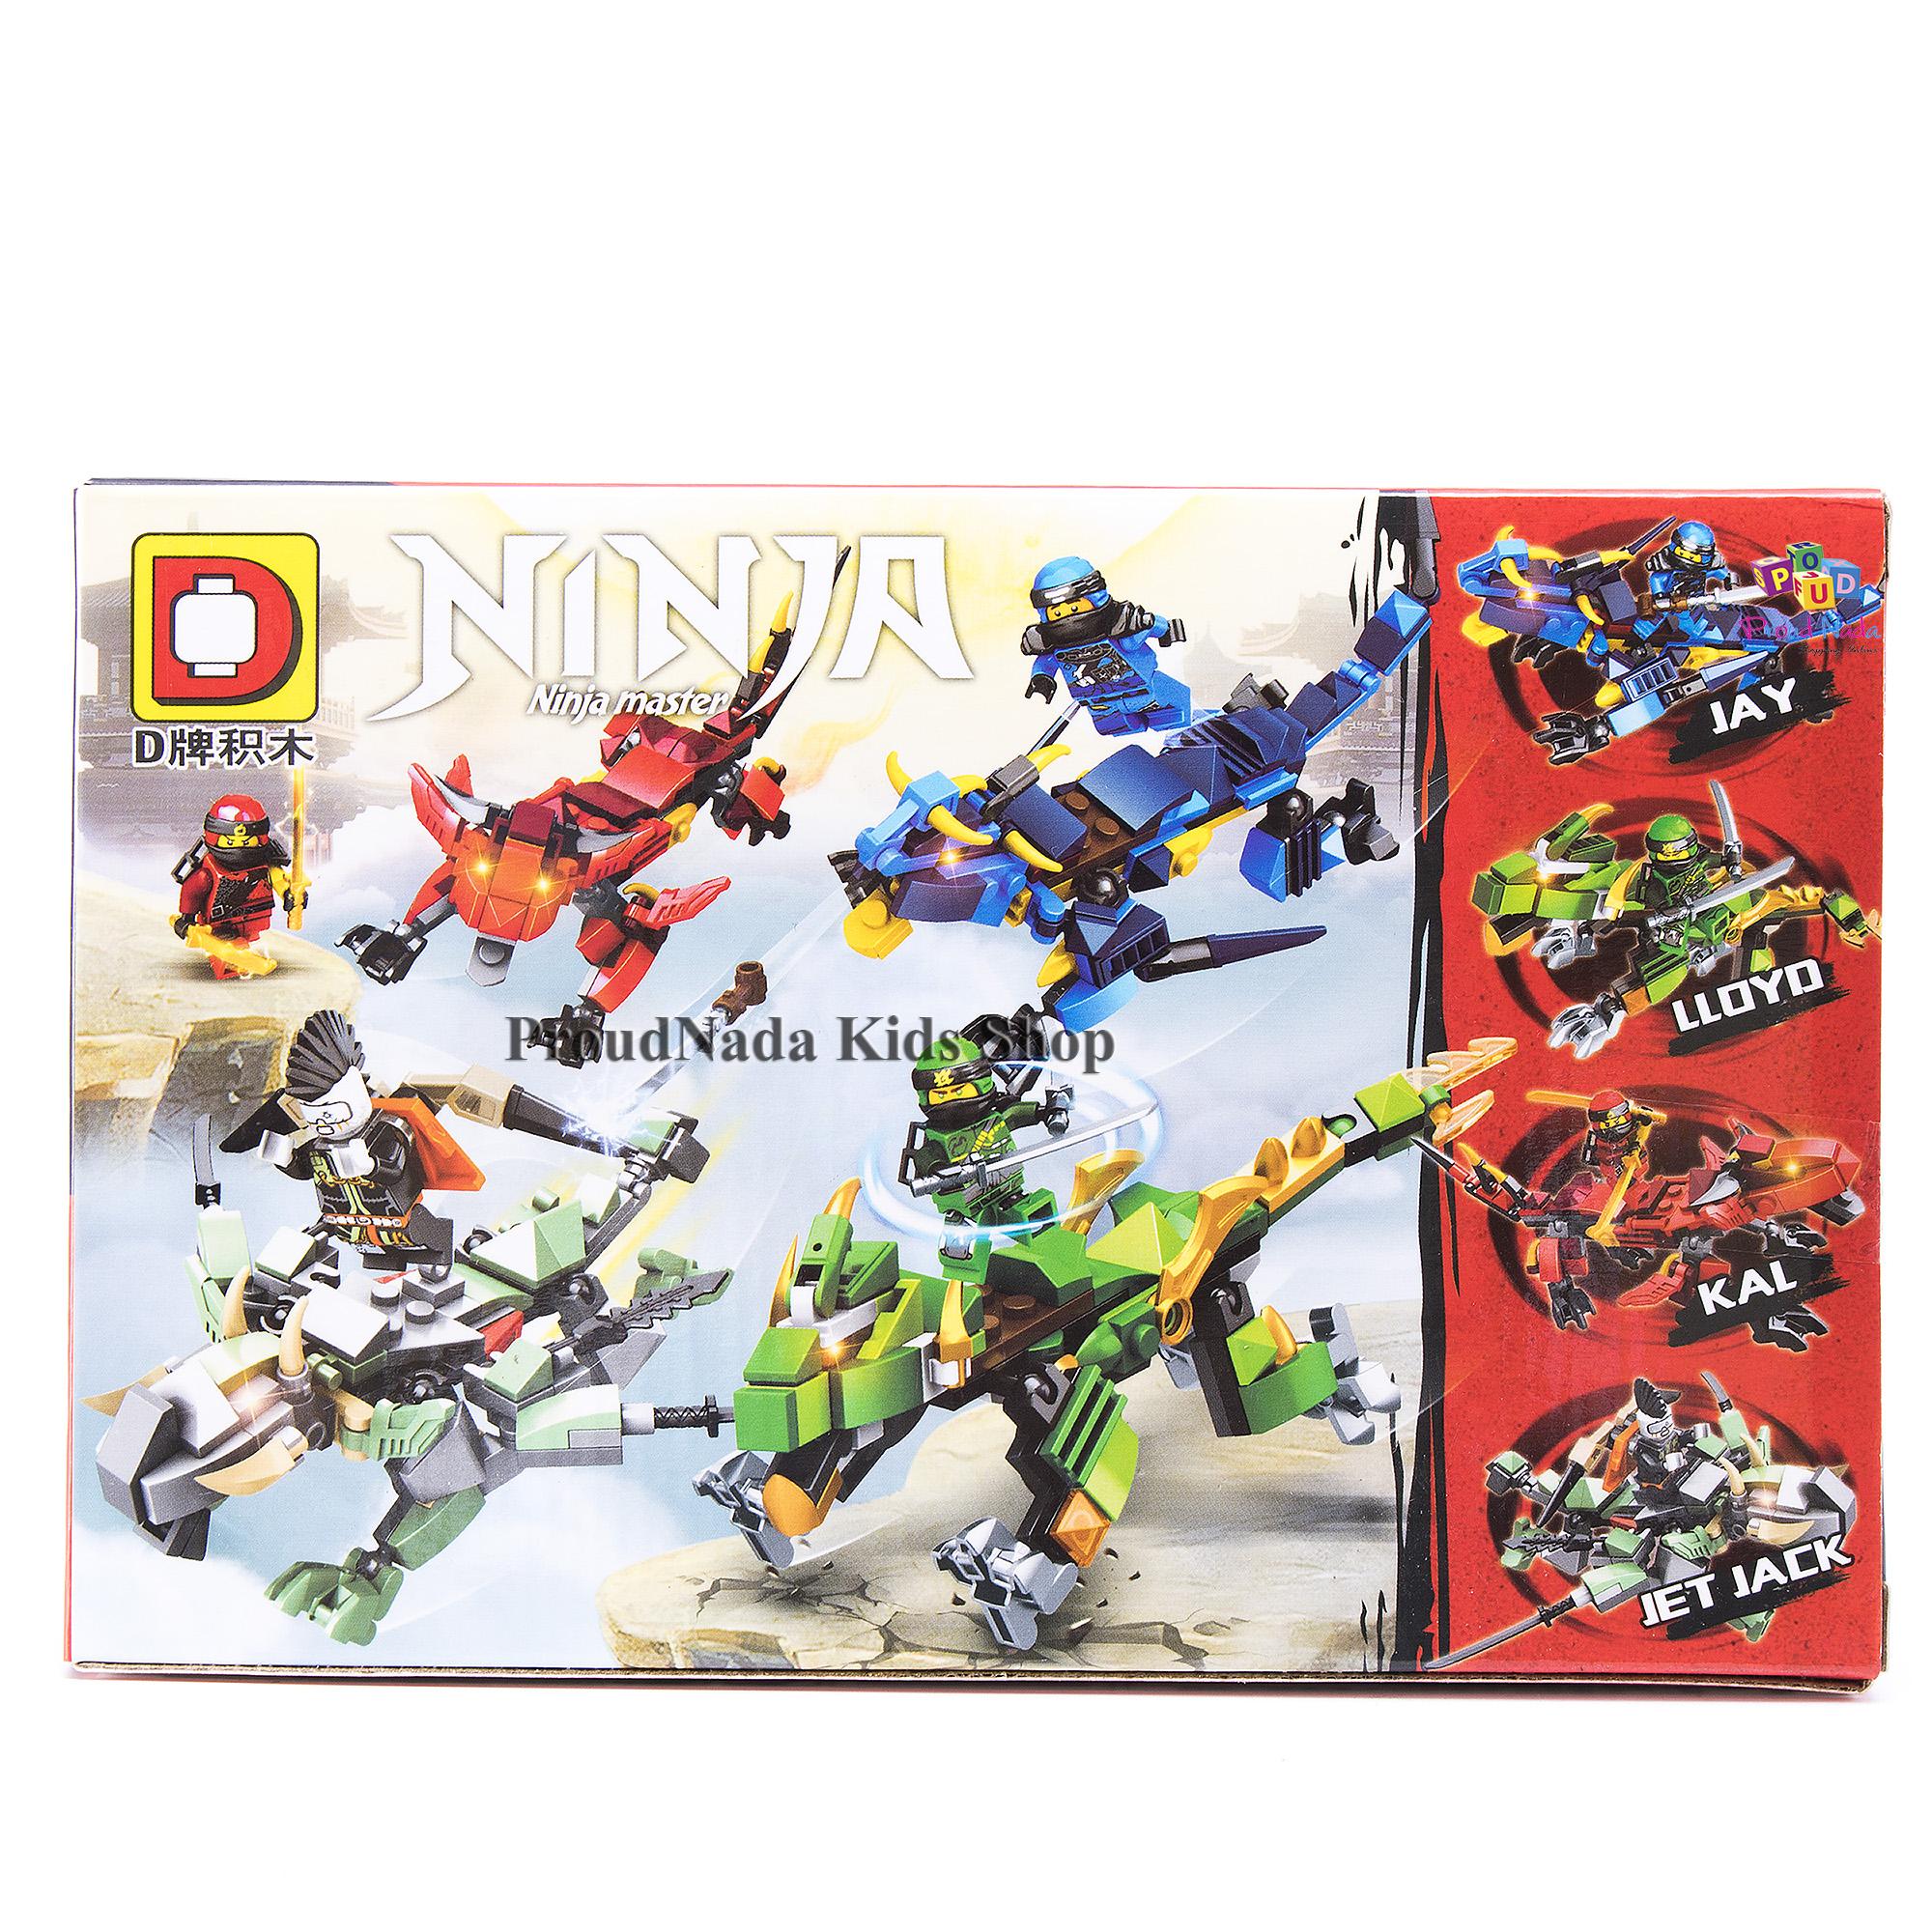 ProudNada Toys ของเล่นเด็กชุดตัวต่อเลโก้นินจามังกร DLP NINJA master DLP525 สี สำน้ำเงินเข้ม